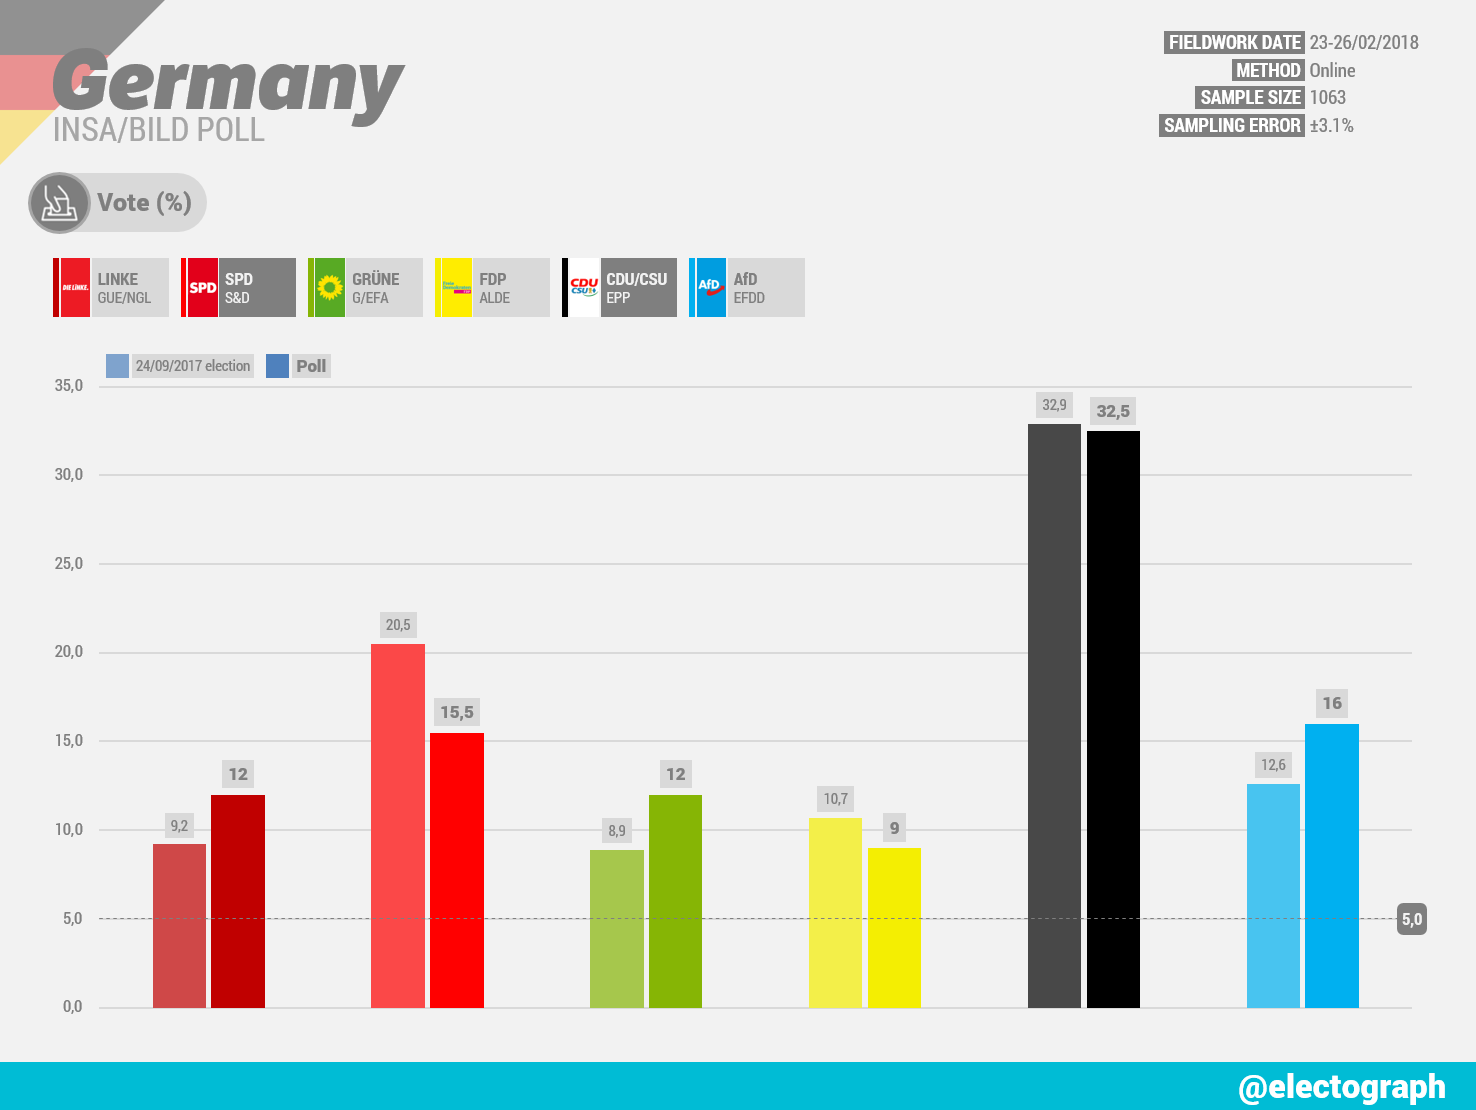 GERMANY INSA poll chart for Bild, February 2018